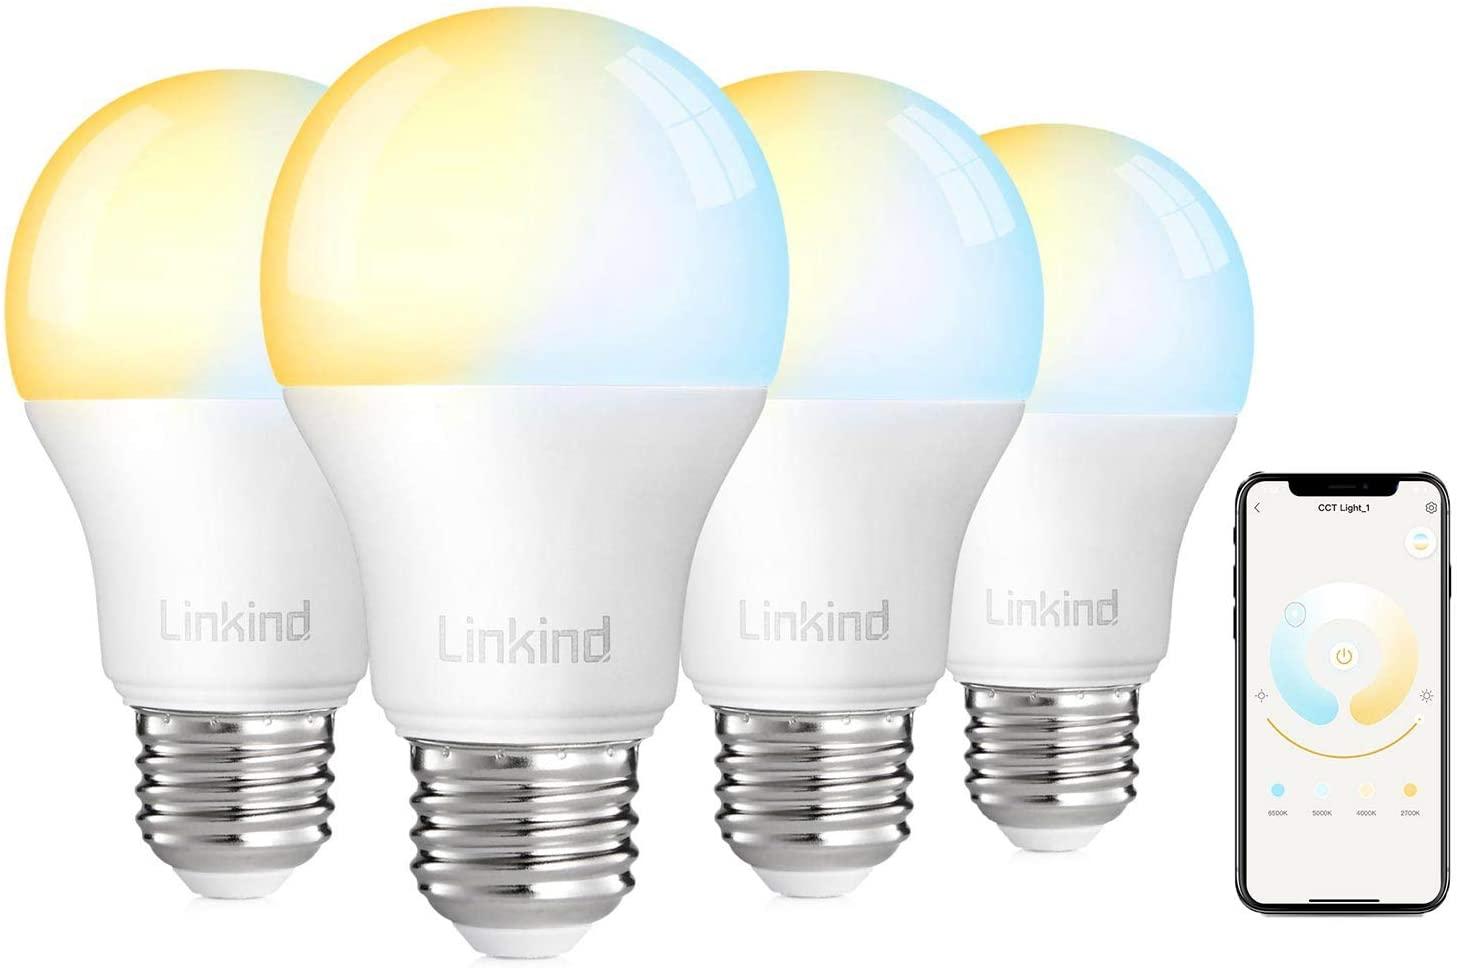 Linkind 800 Lumens 60W Equivalent Smart Wifi LED 4 Light Bulbs for $8.39 Shipped